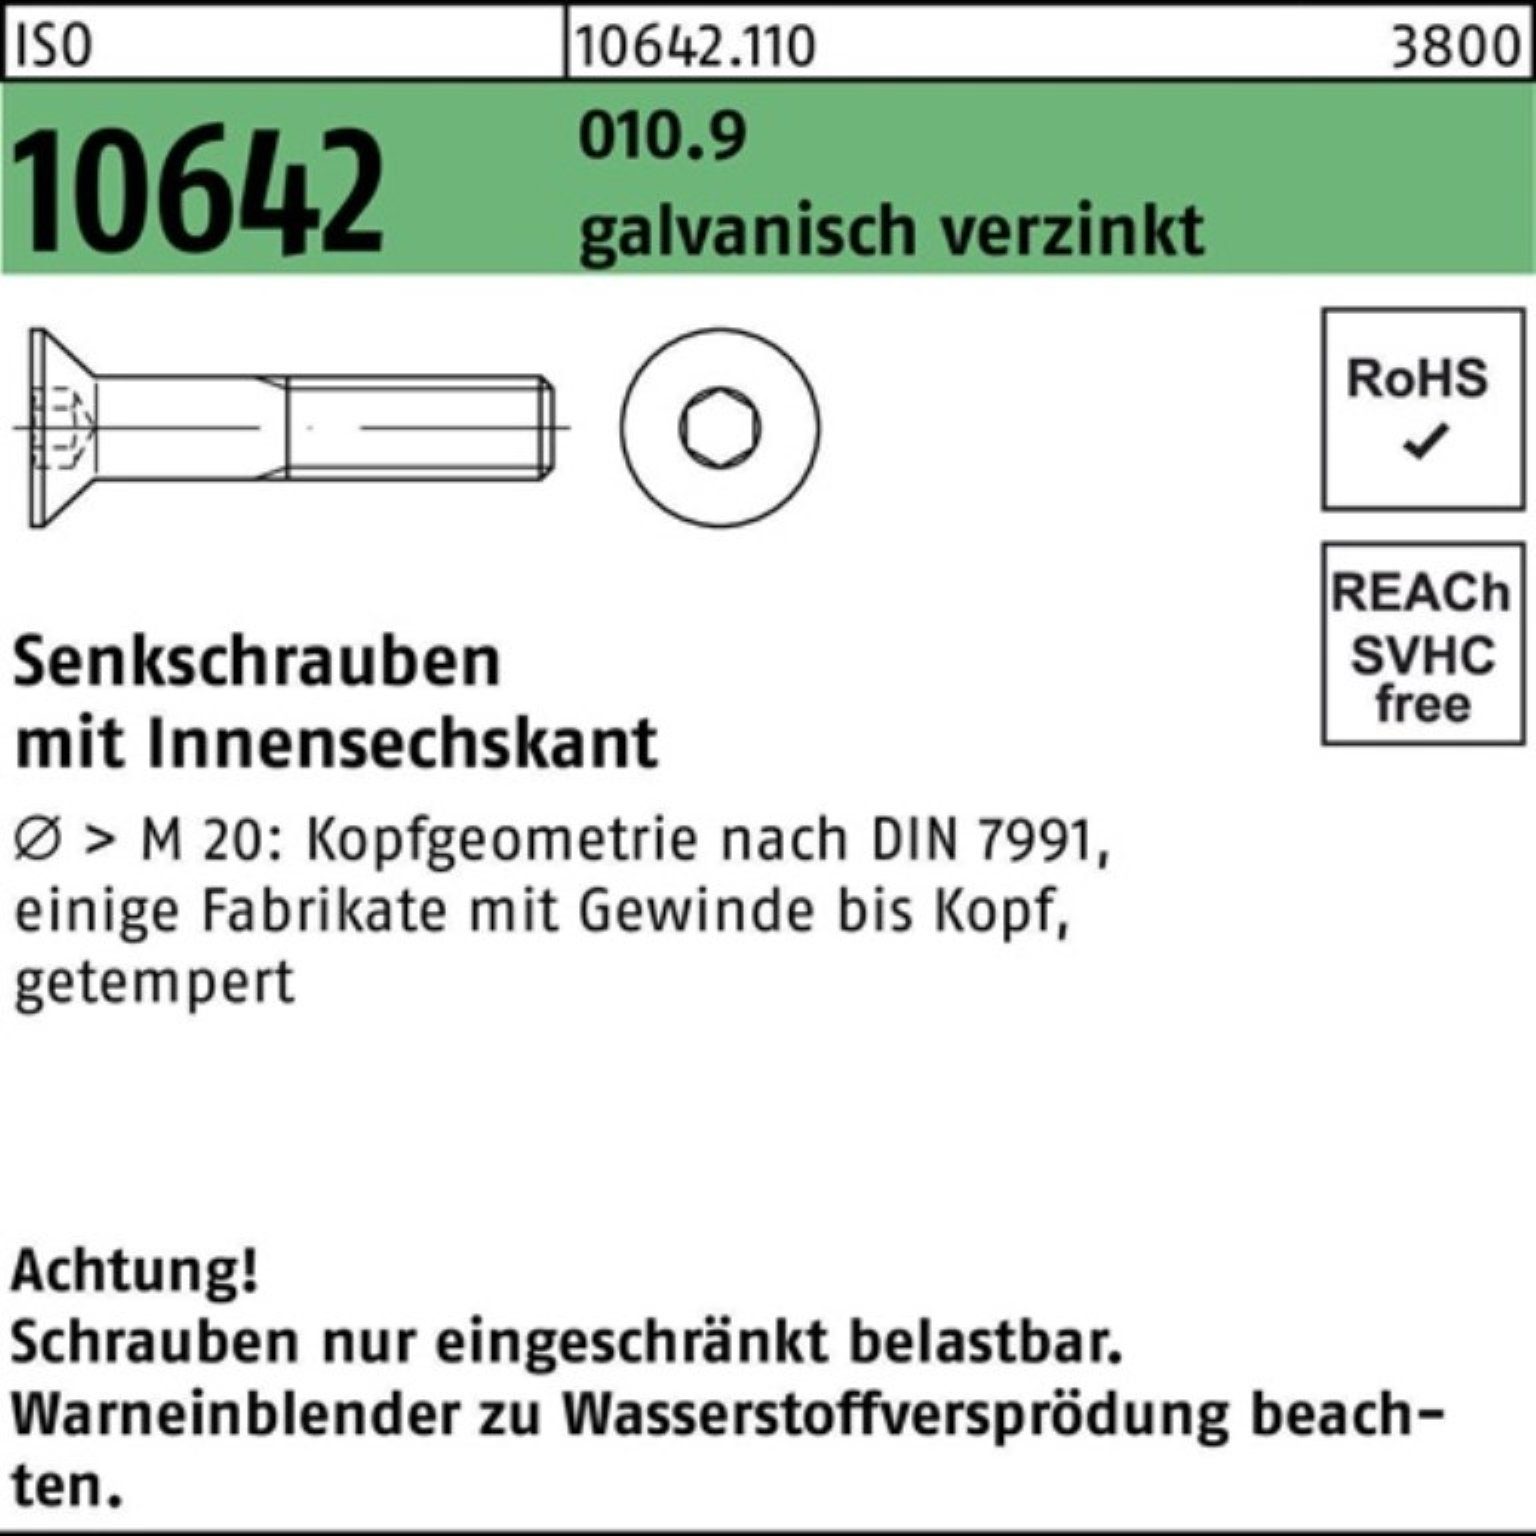 Reyher Senkschraube 200er Pack Senkschraube ISO 10642 Innen-6kt M8x 10 010.9 galv.verz. 20